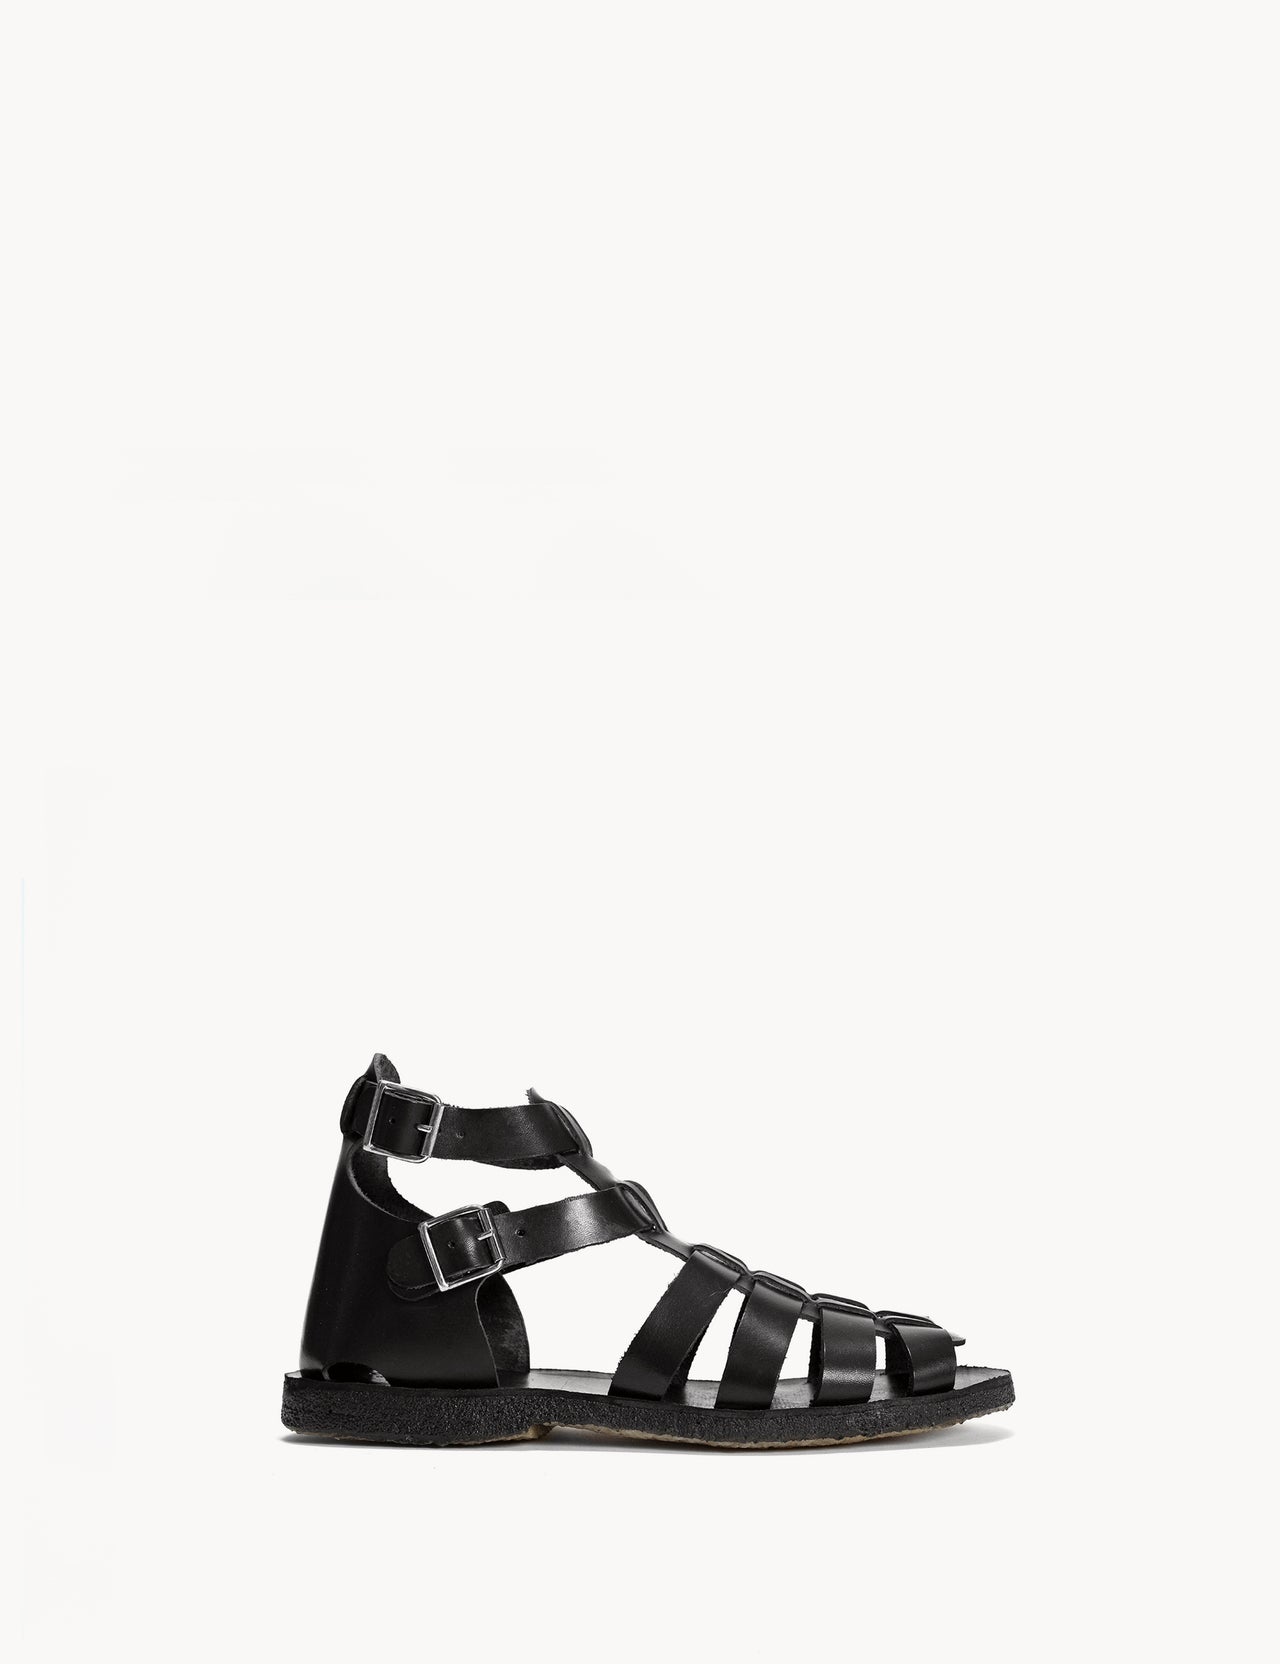 Gladiator Sandal In Black Vaq Vegetal Calf Leather